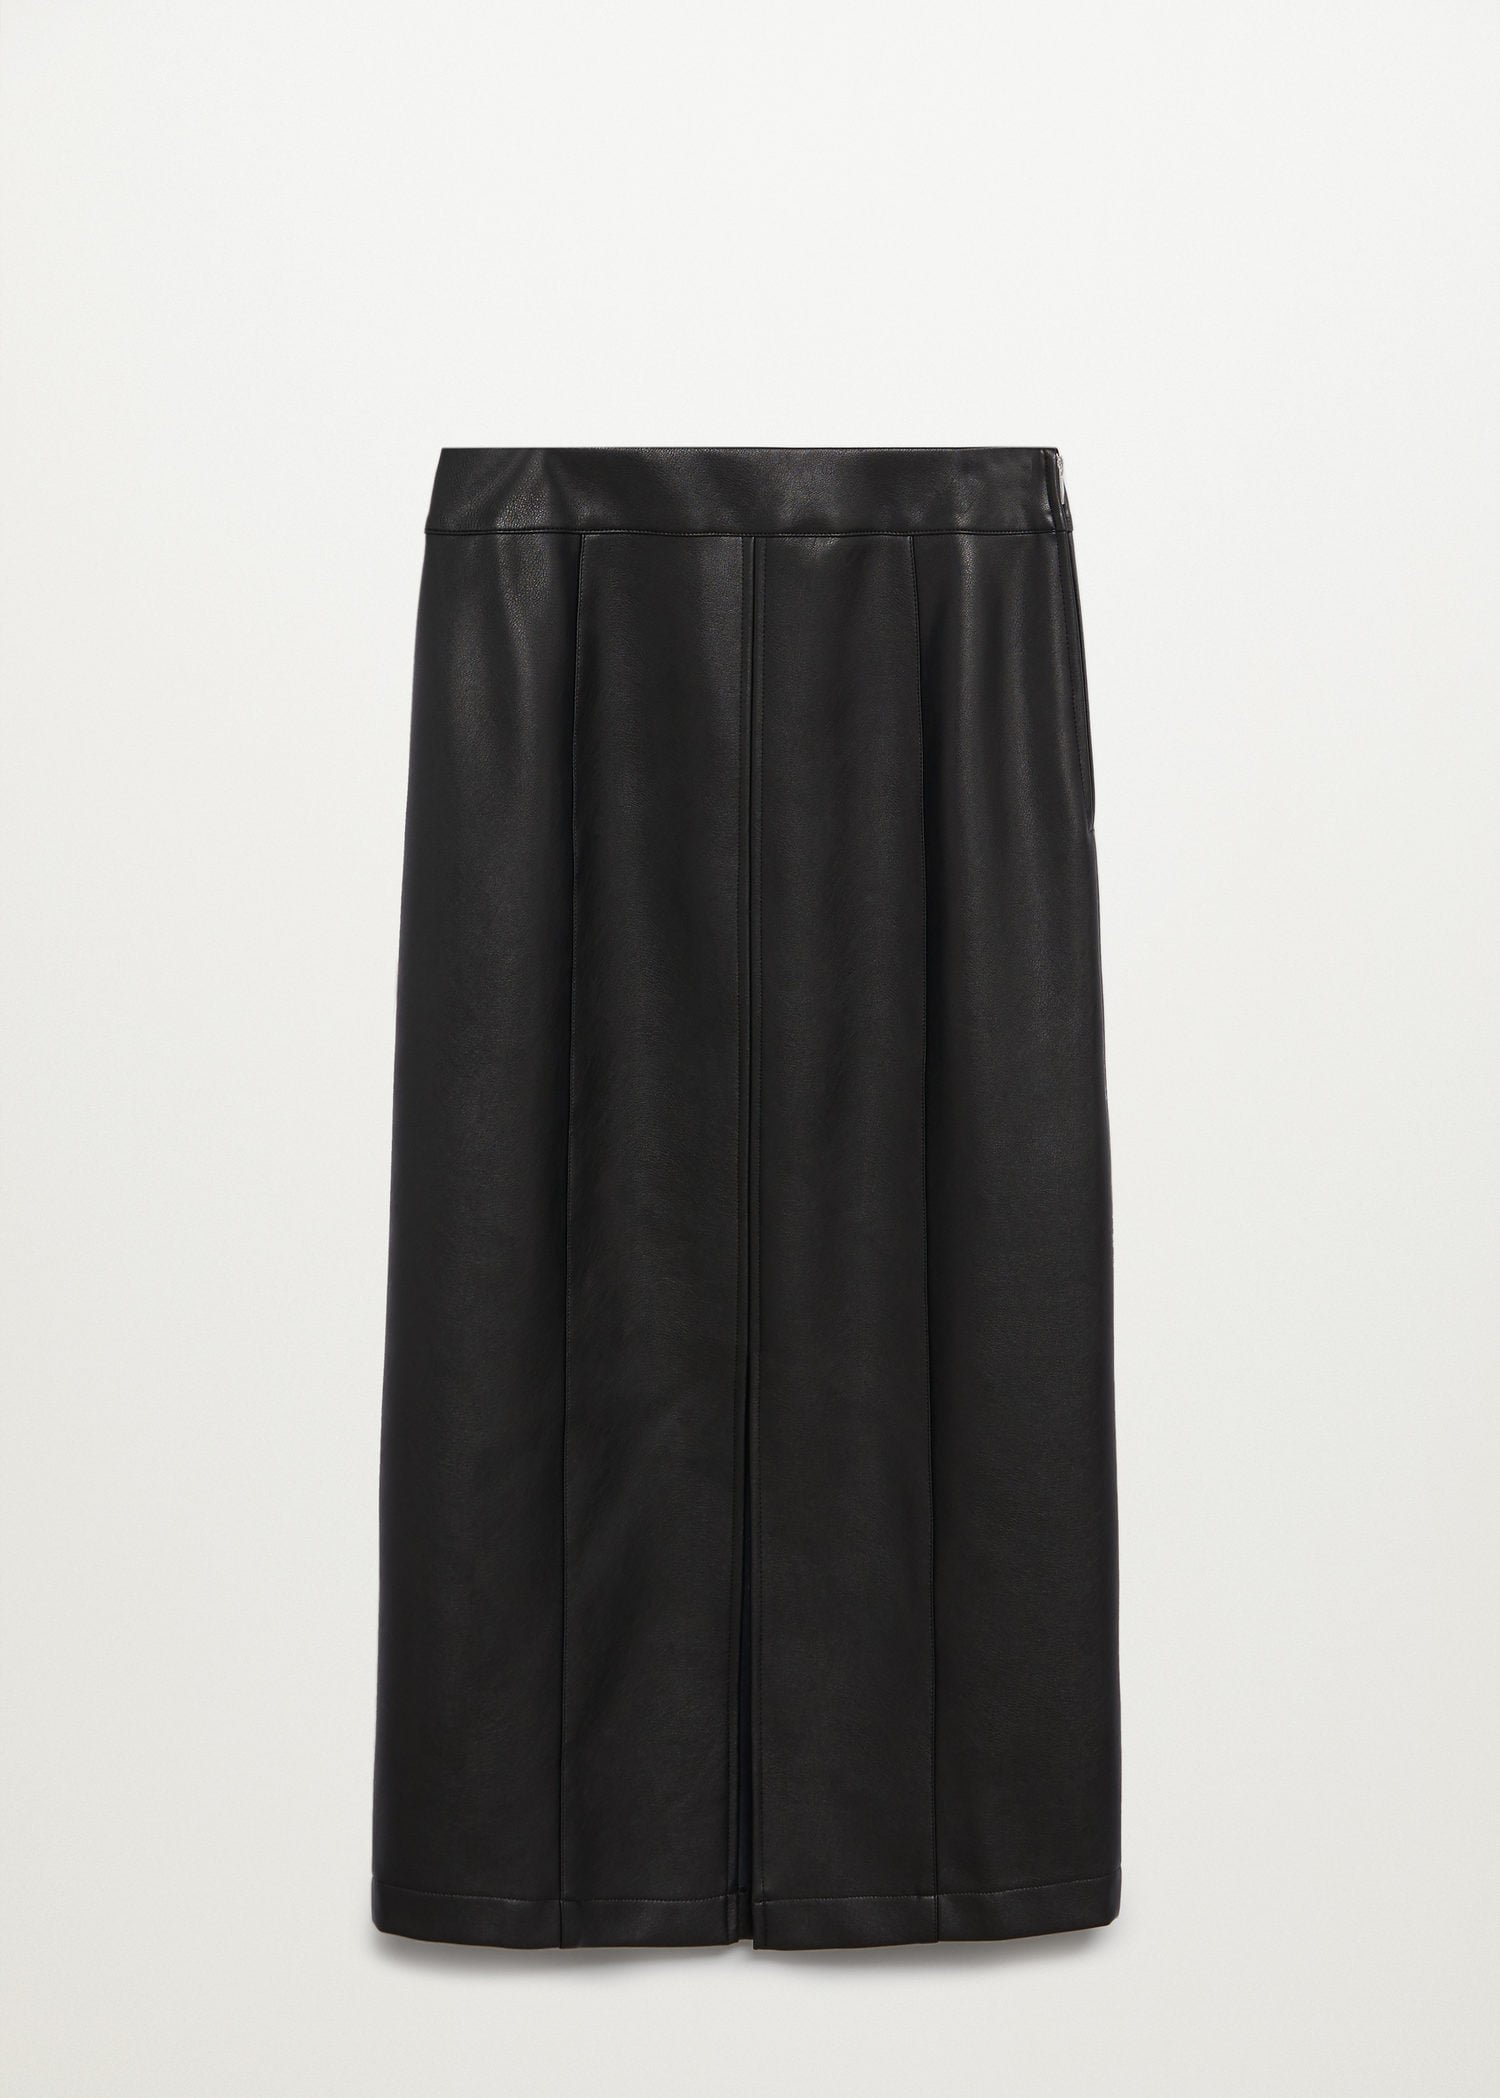 MANGO Faux-Leather Pencil Skirt in Black | Endource